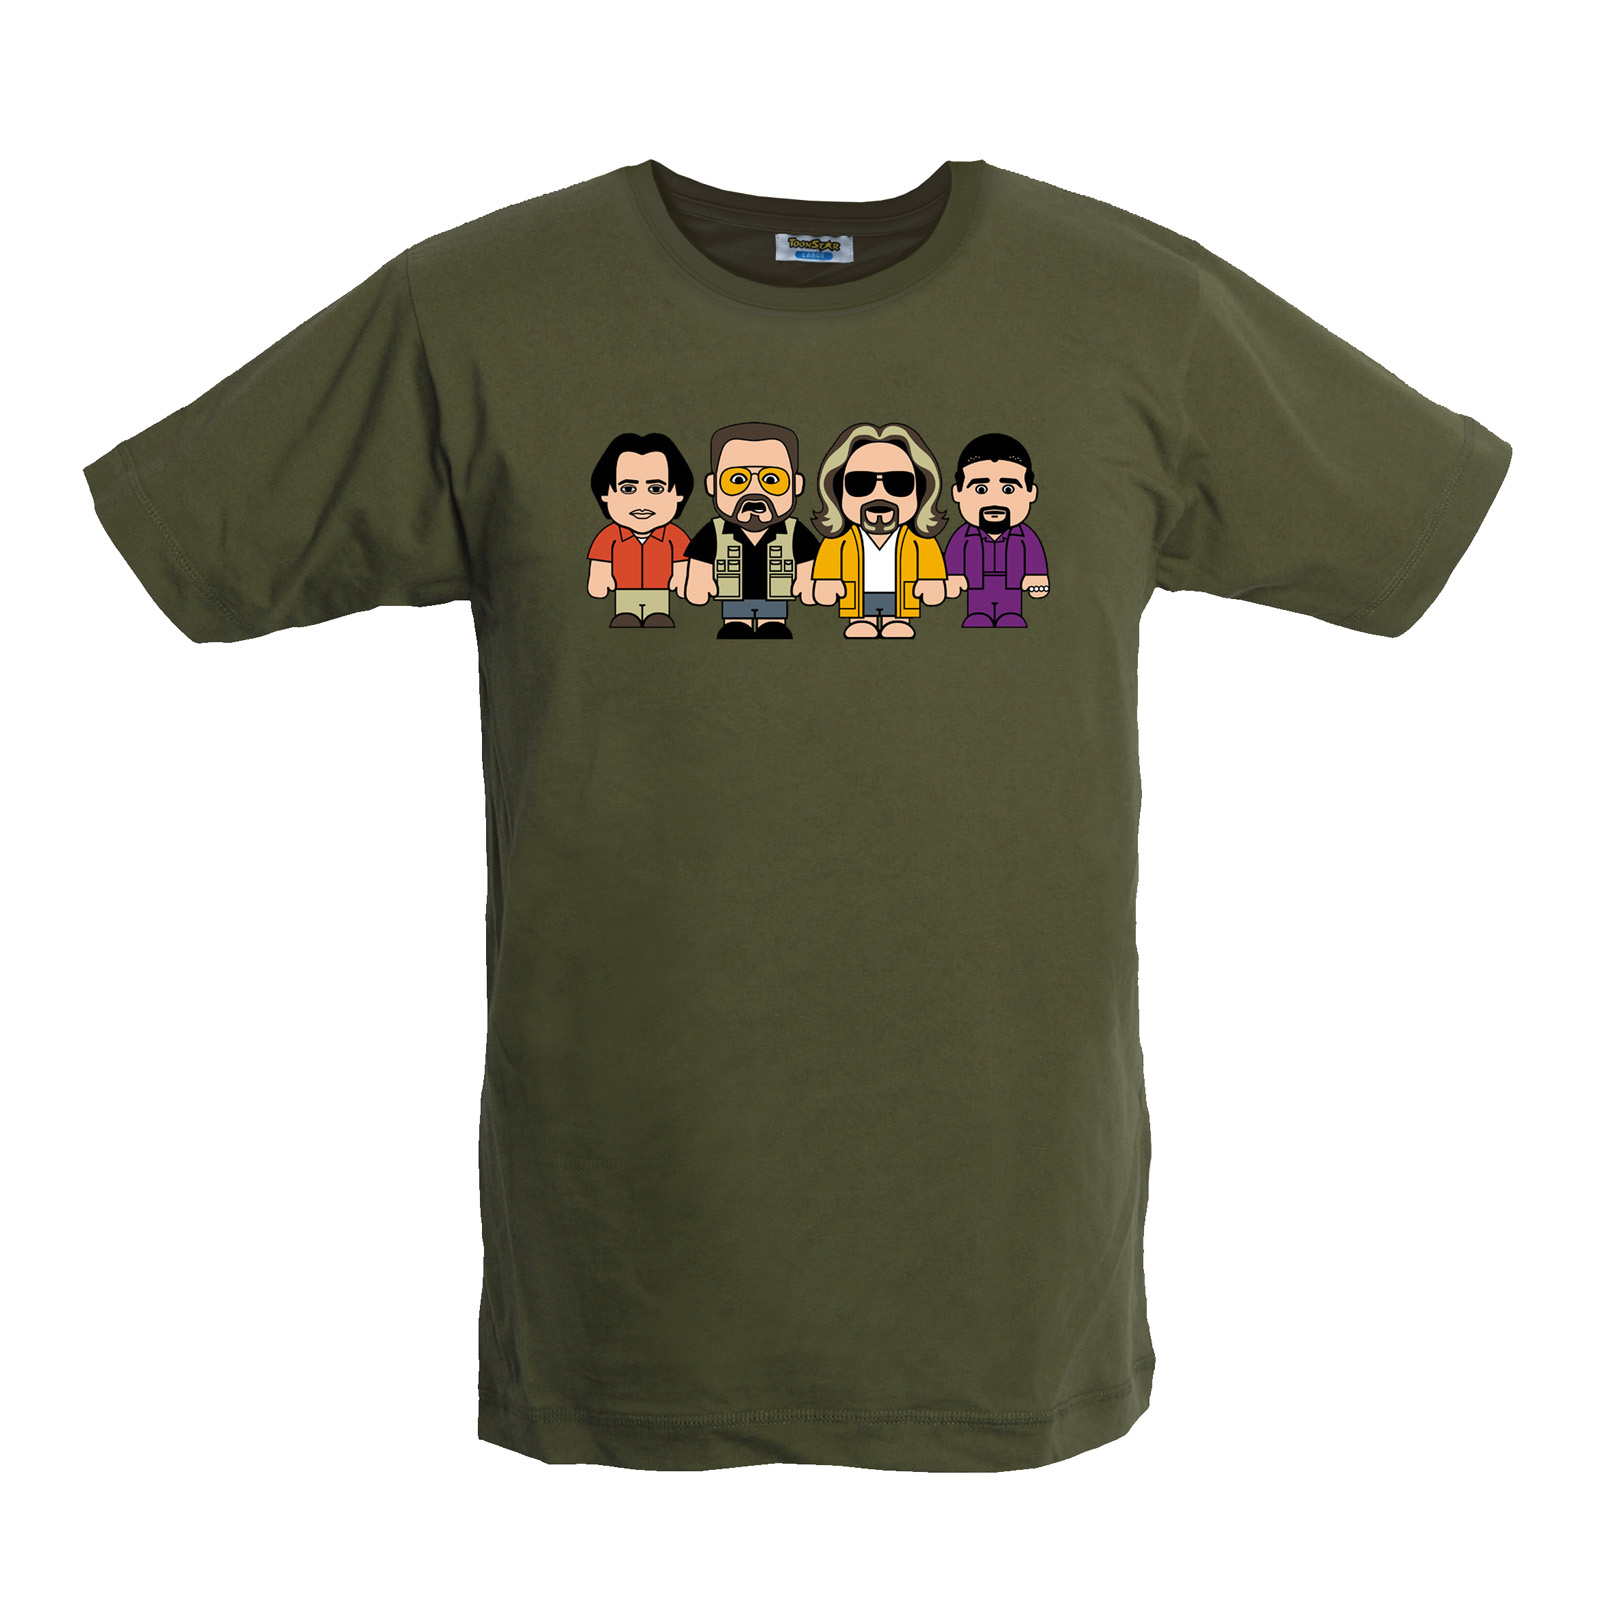 Bowling Team - Toonstar T-Shirt